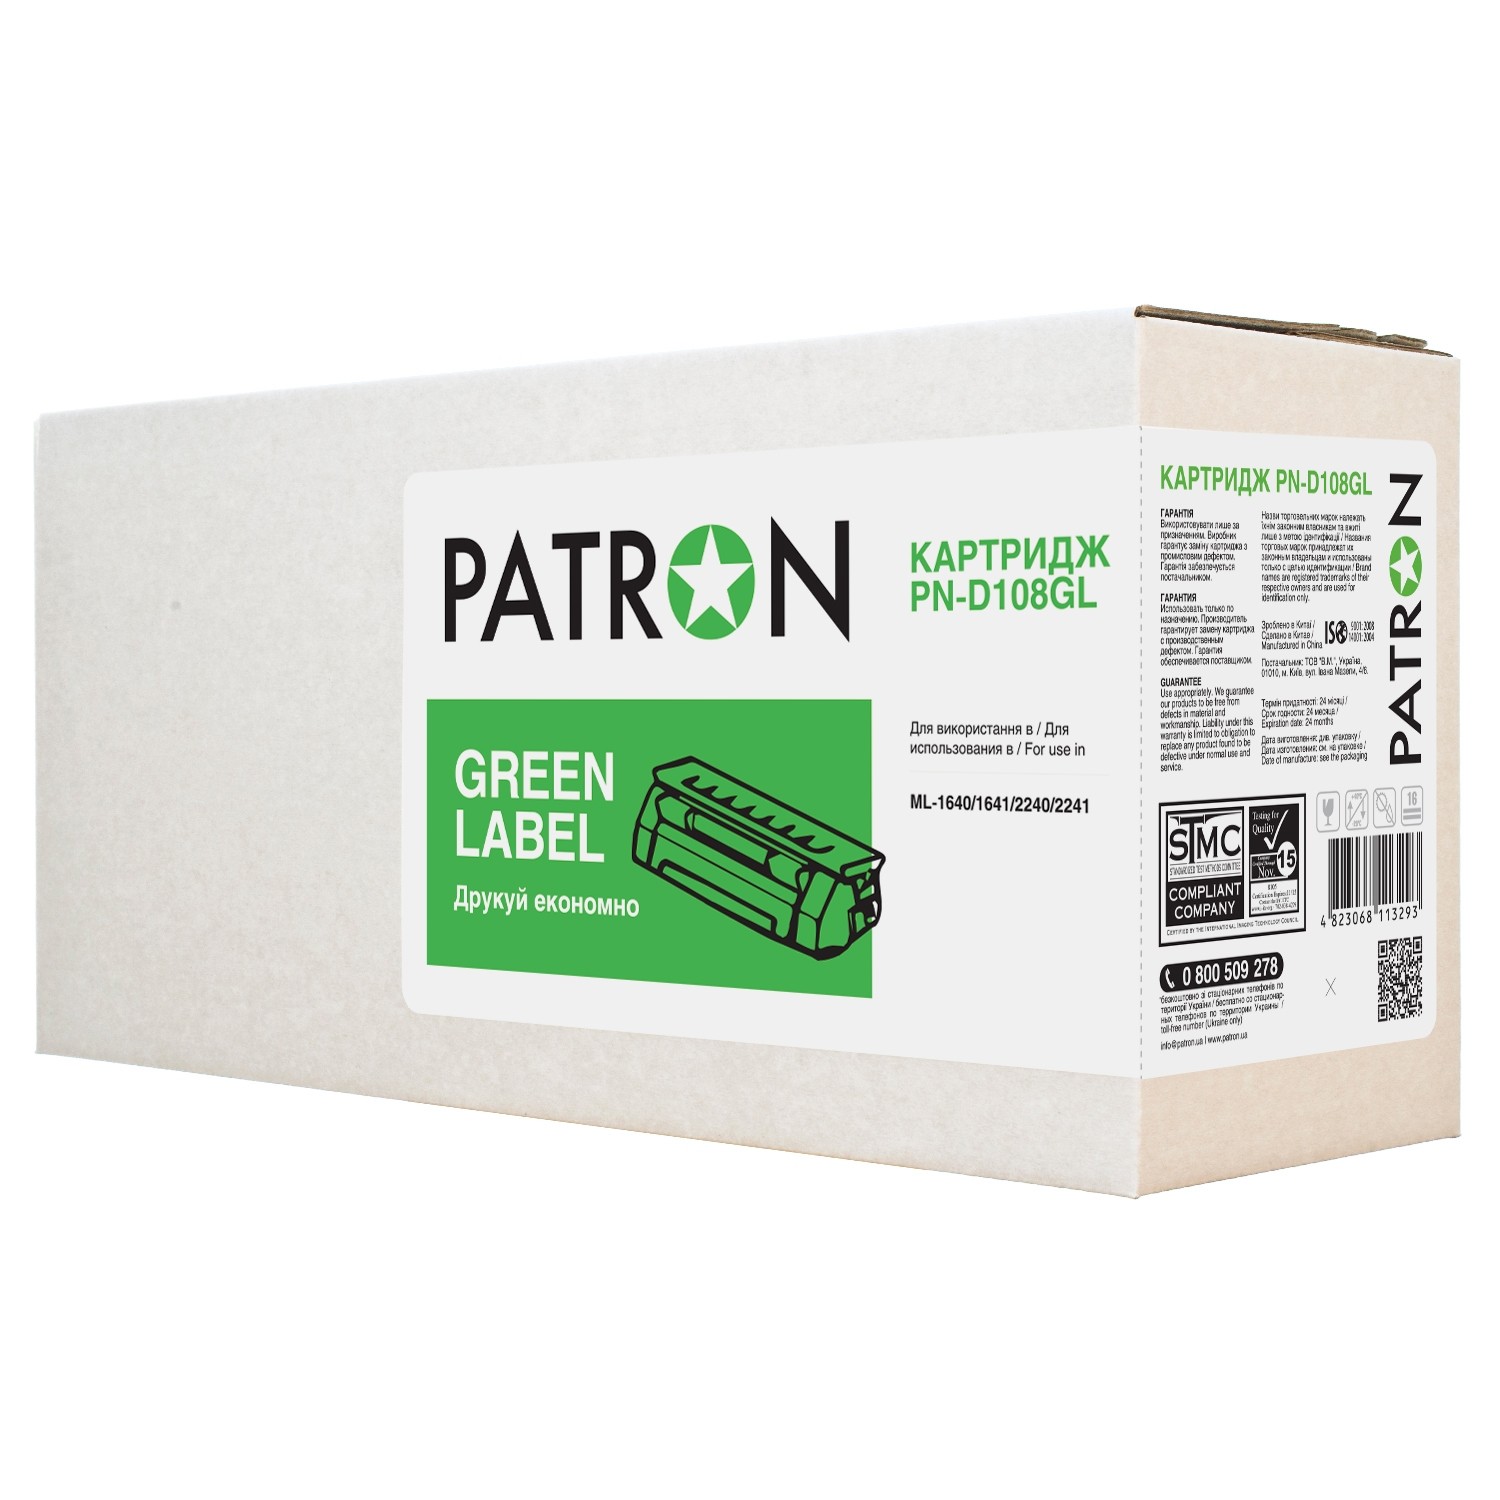 КАРТРИДЖ SAMSUNG MLT-D108S (PN-D108GL) (ML-1640) PATRON GREEN Label  